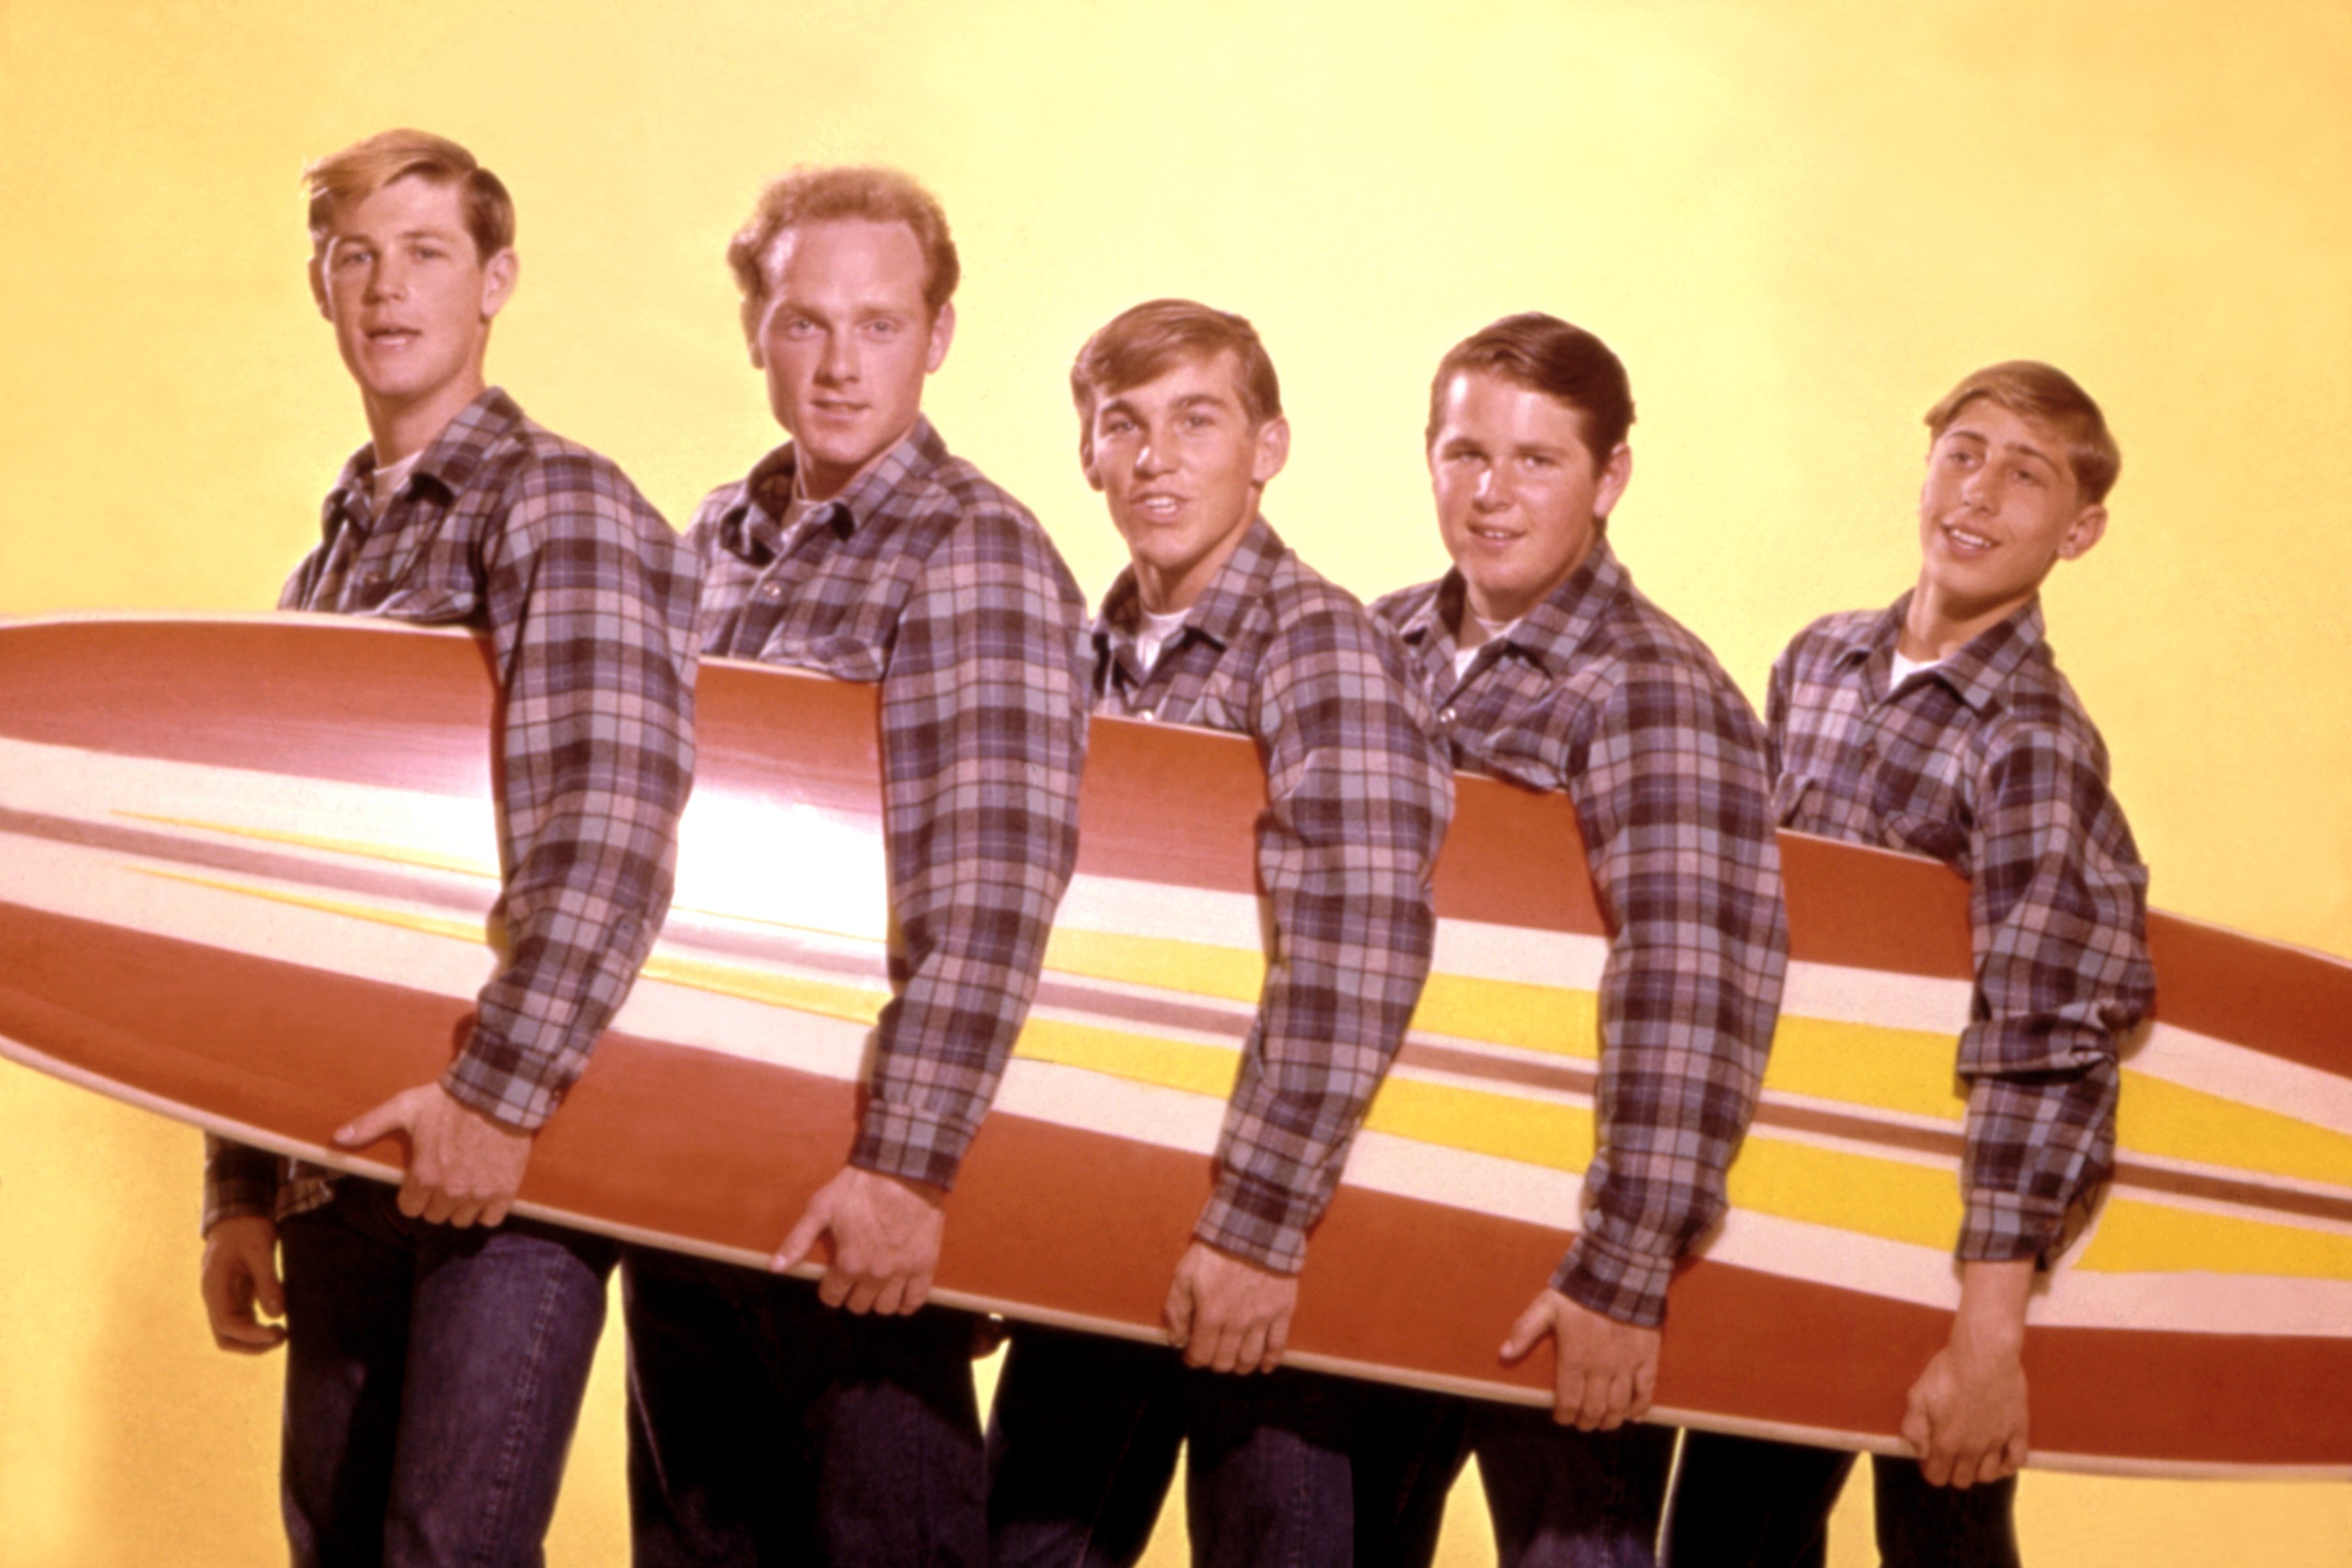 The Beach Boys’ Brian Wilson, Mike Love, Dennis Wilson, Carl Wilson, and David Marks with a surf board